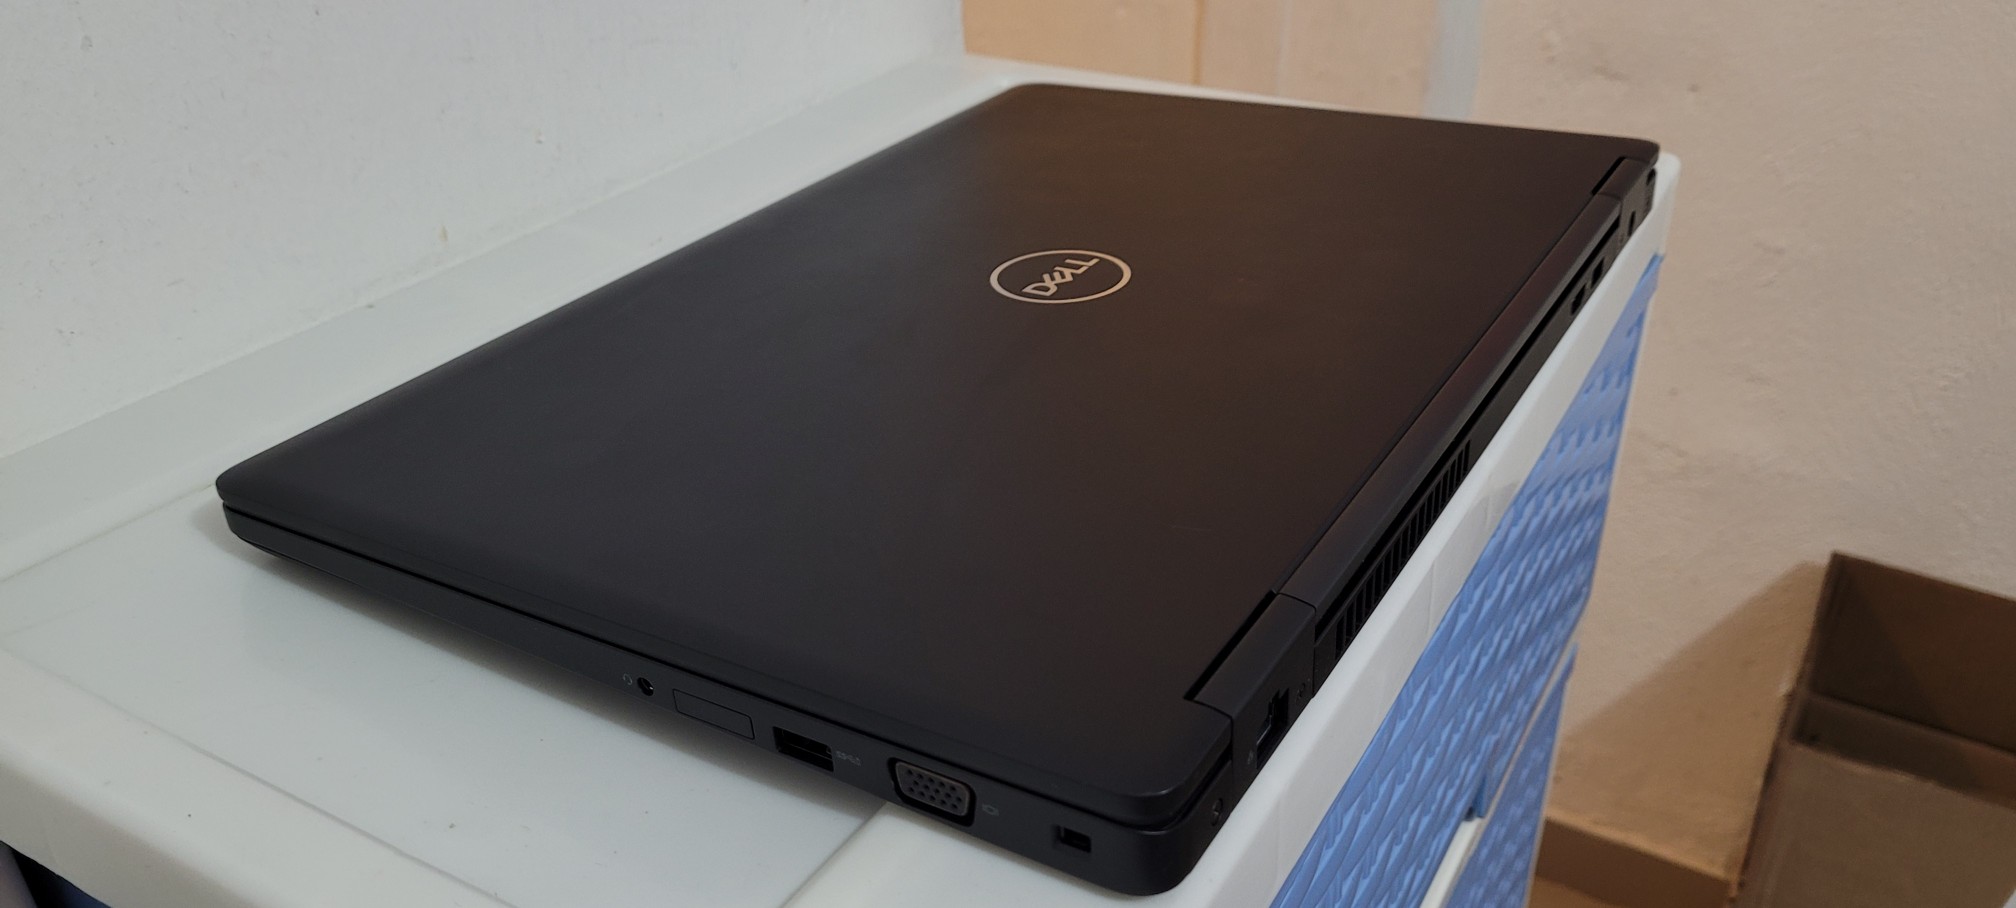 computadoras y laptops - Dell 5580 17 Pulg Core i5 7ma Ram 8gb ddr4 Disco 128gb SSD hdmi usb tipo-C 2